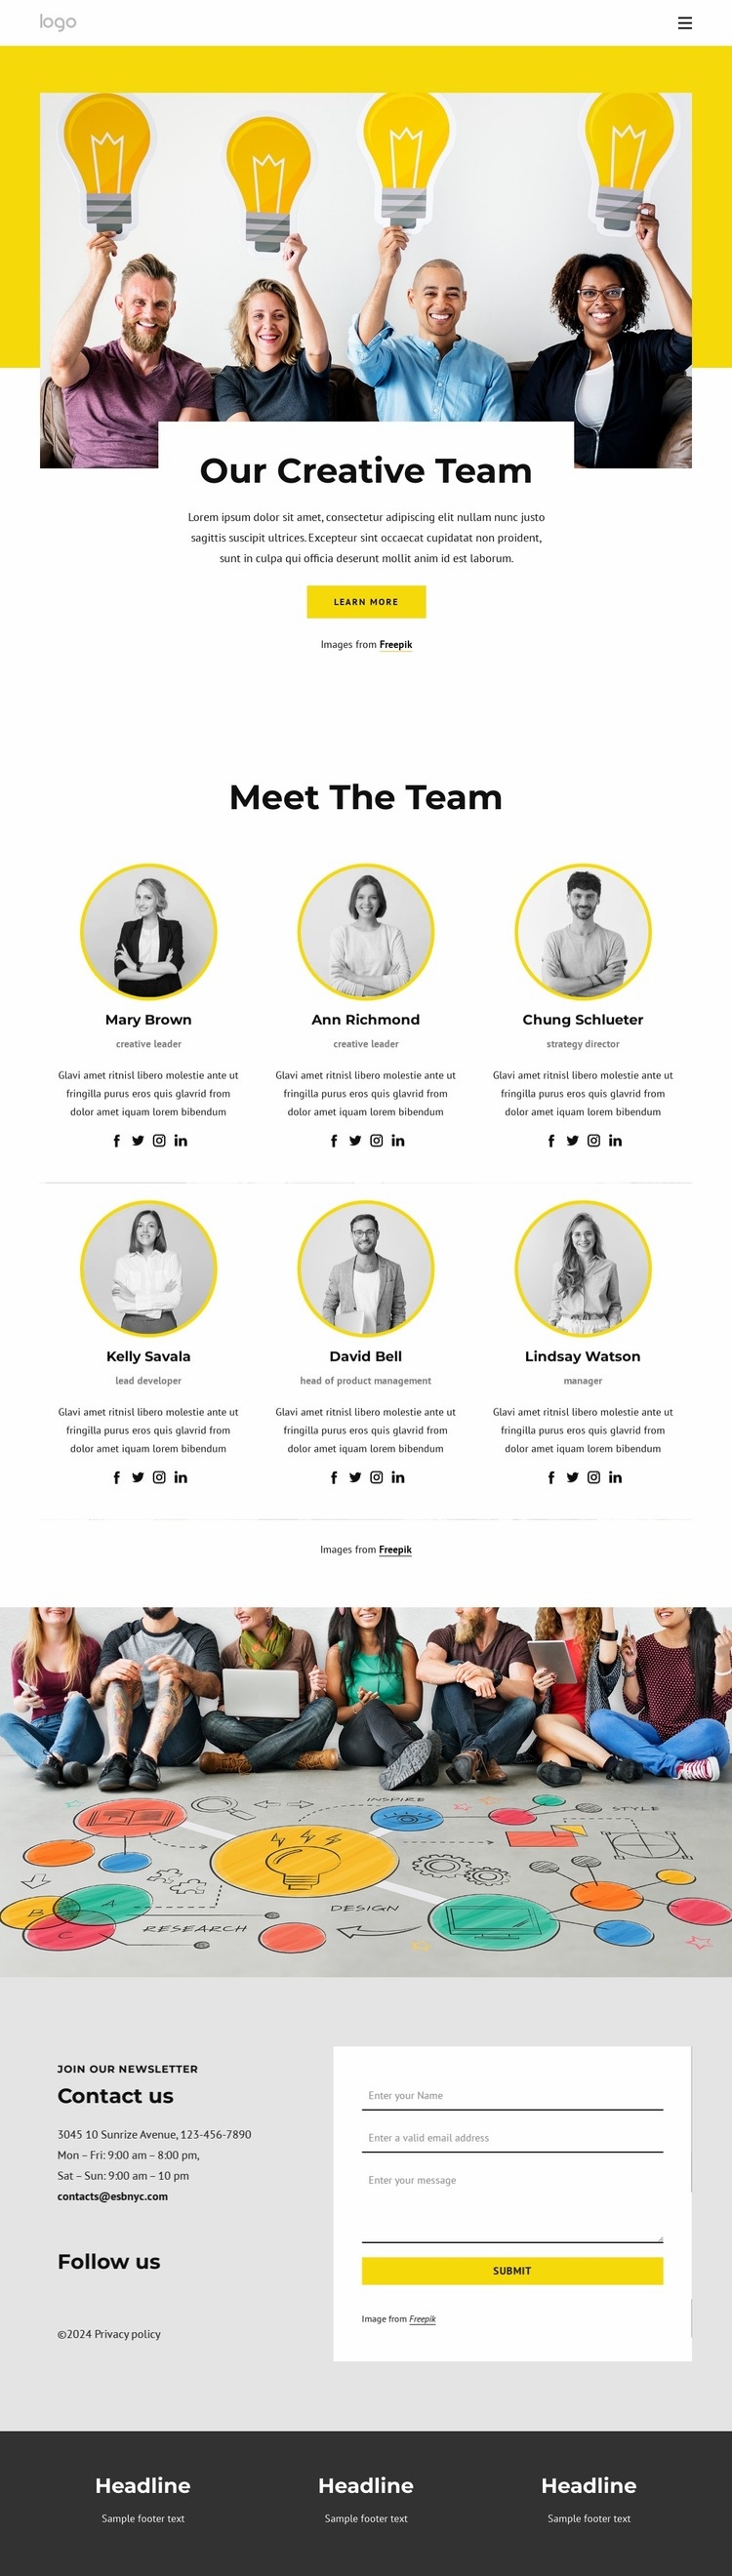 Meet our creative minds Web Page Design